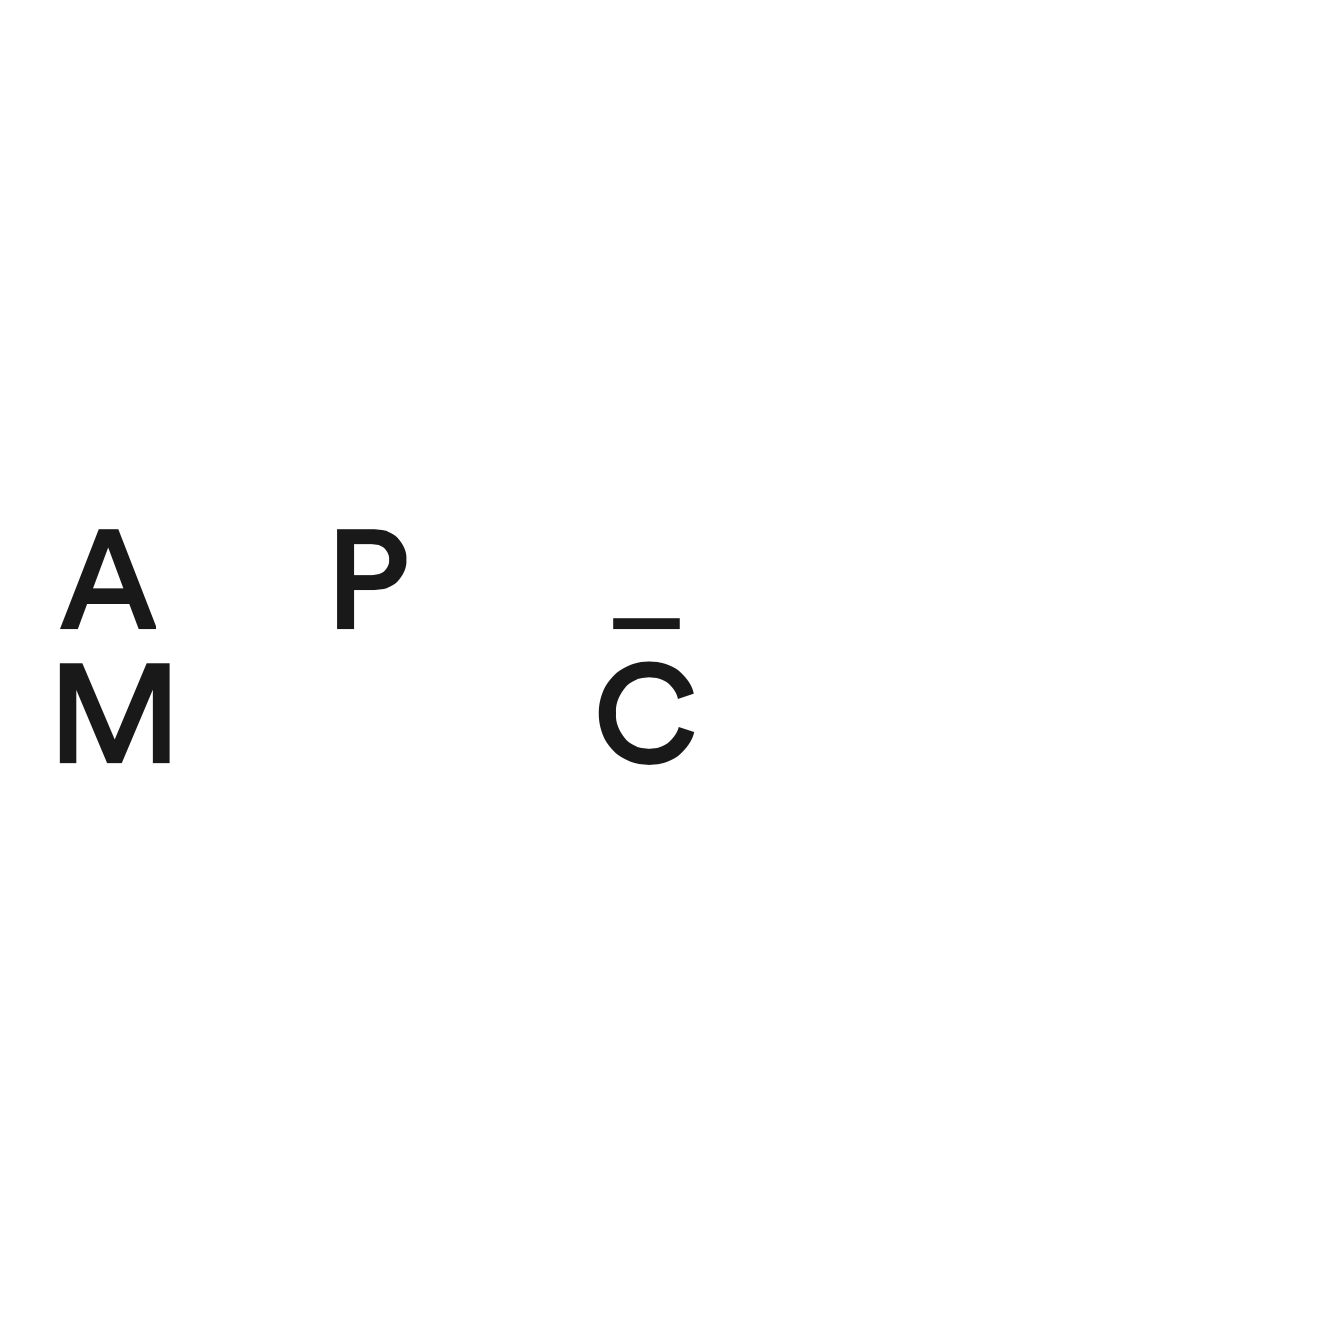 APMC